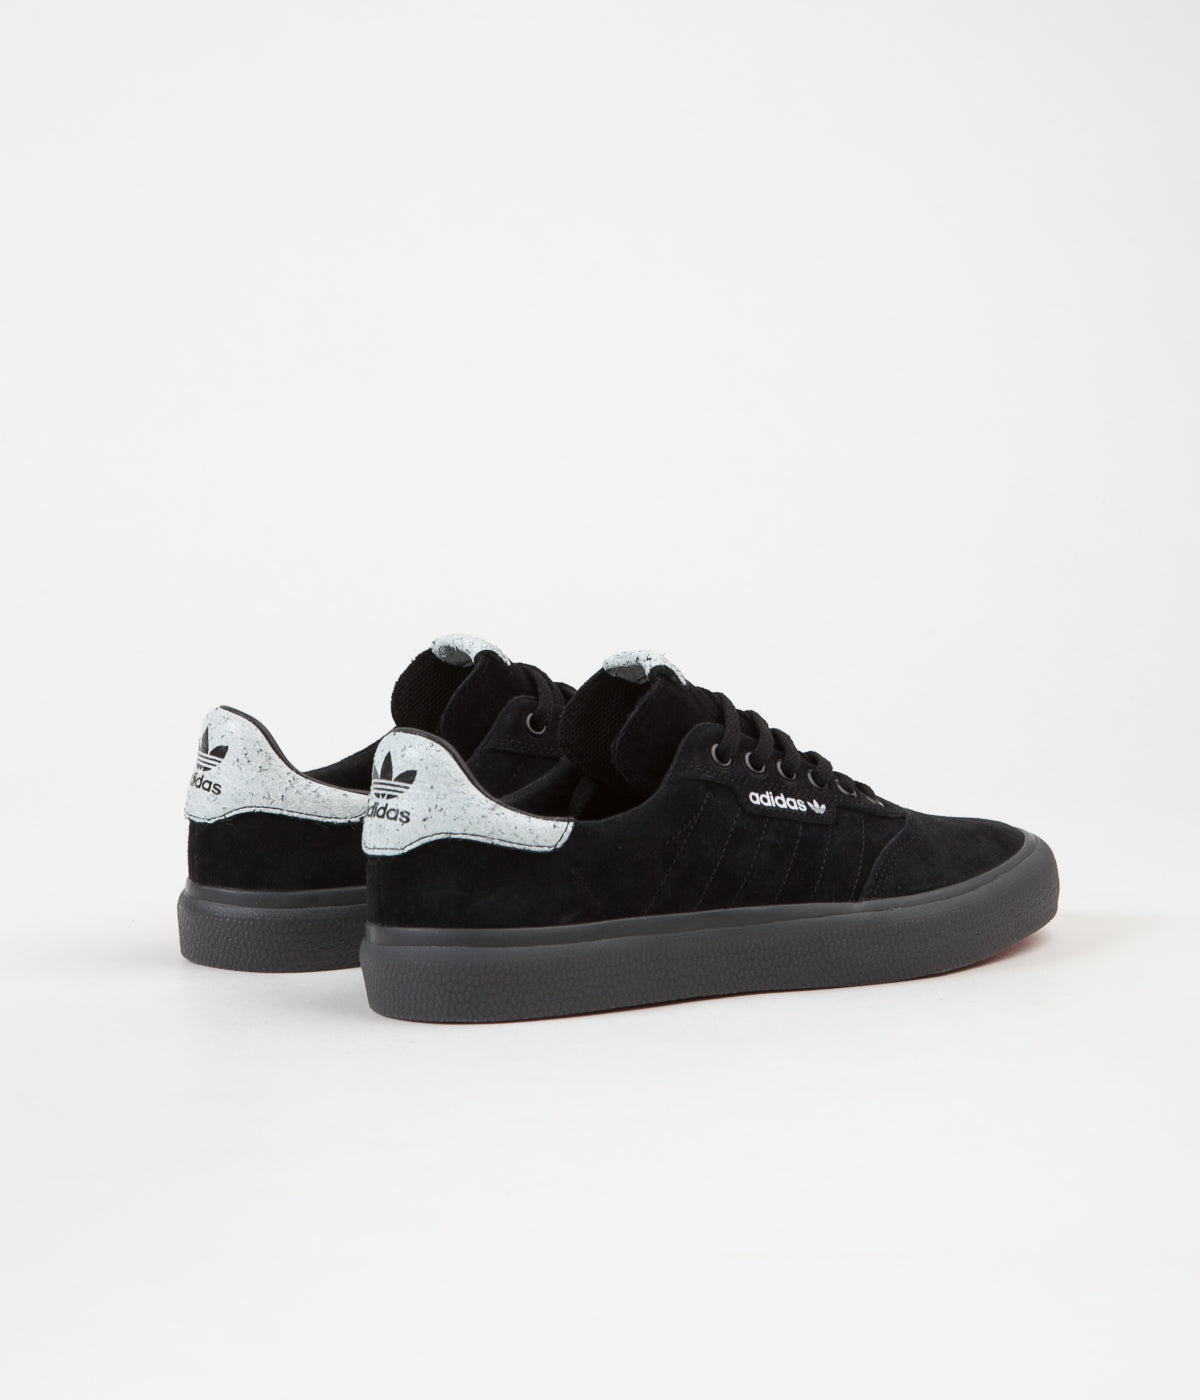 adidas 3mc black white & grey shoes